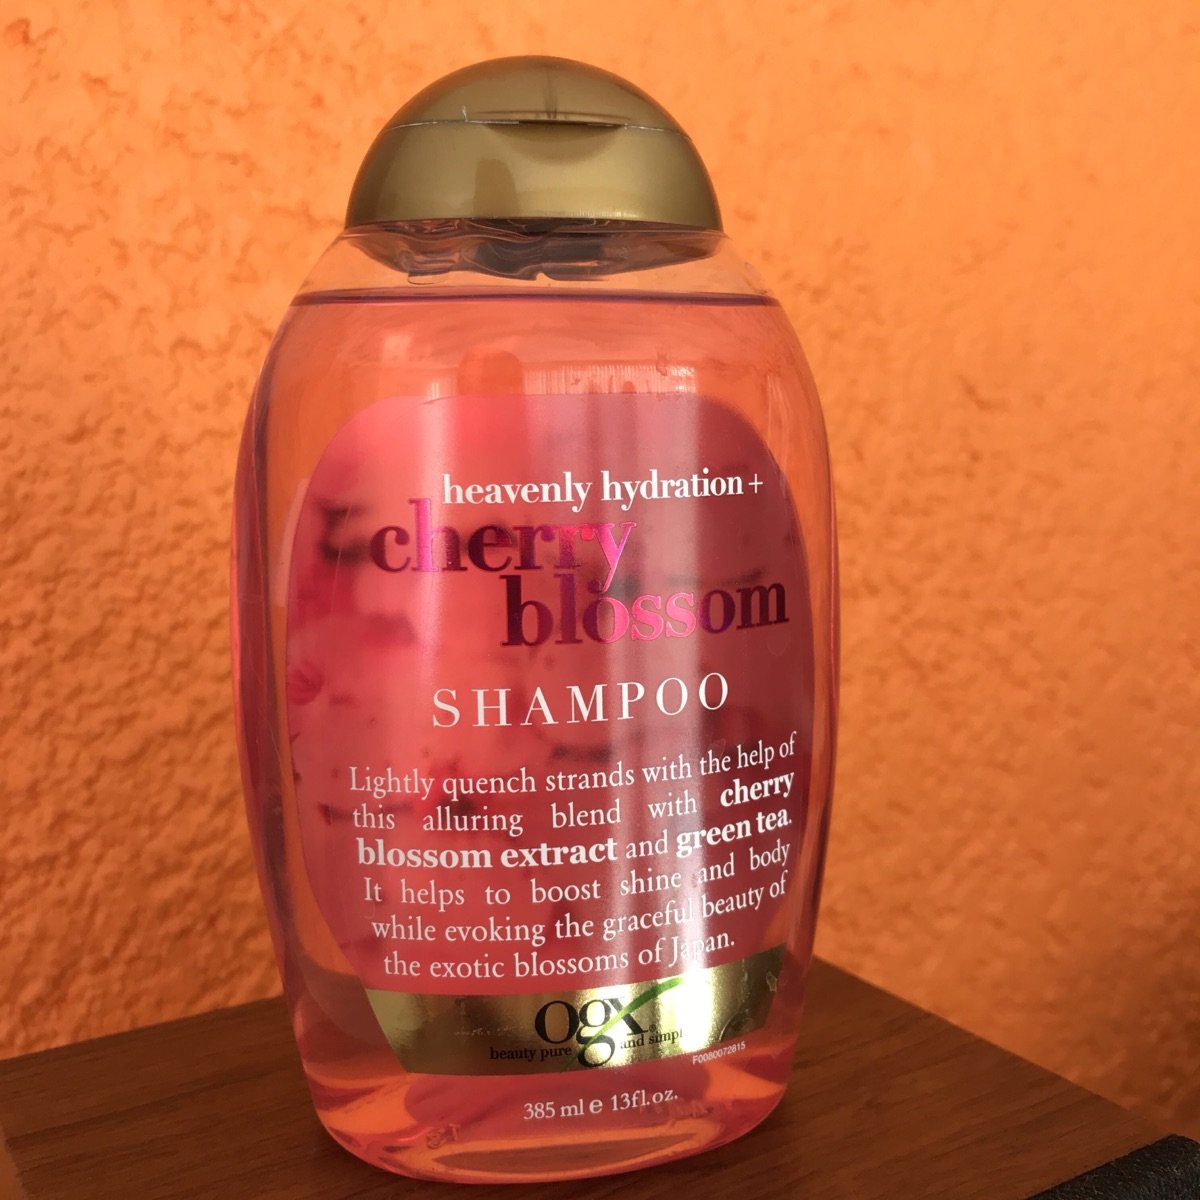 Avis sur Shampoo Cherry blossom par OGX Beauty | abillion